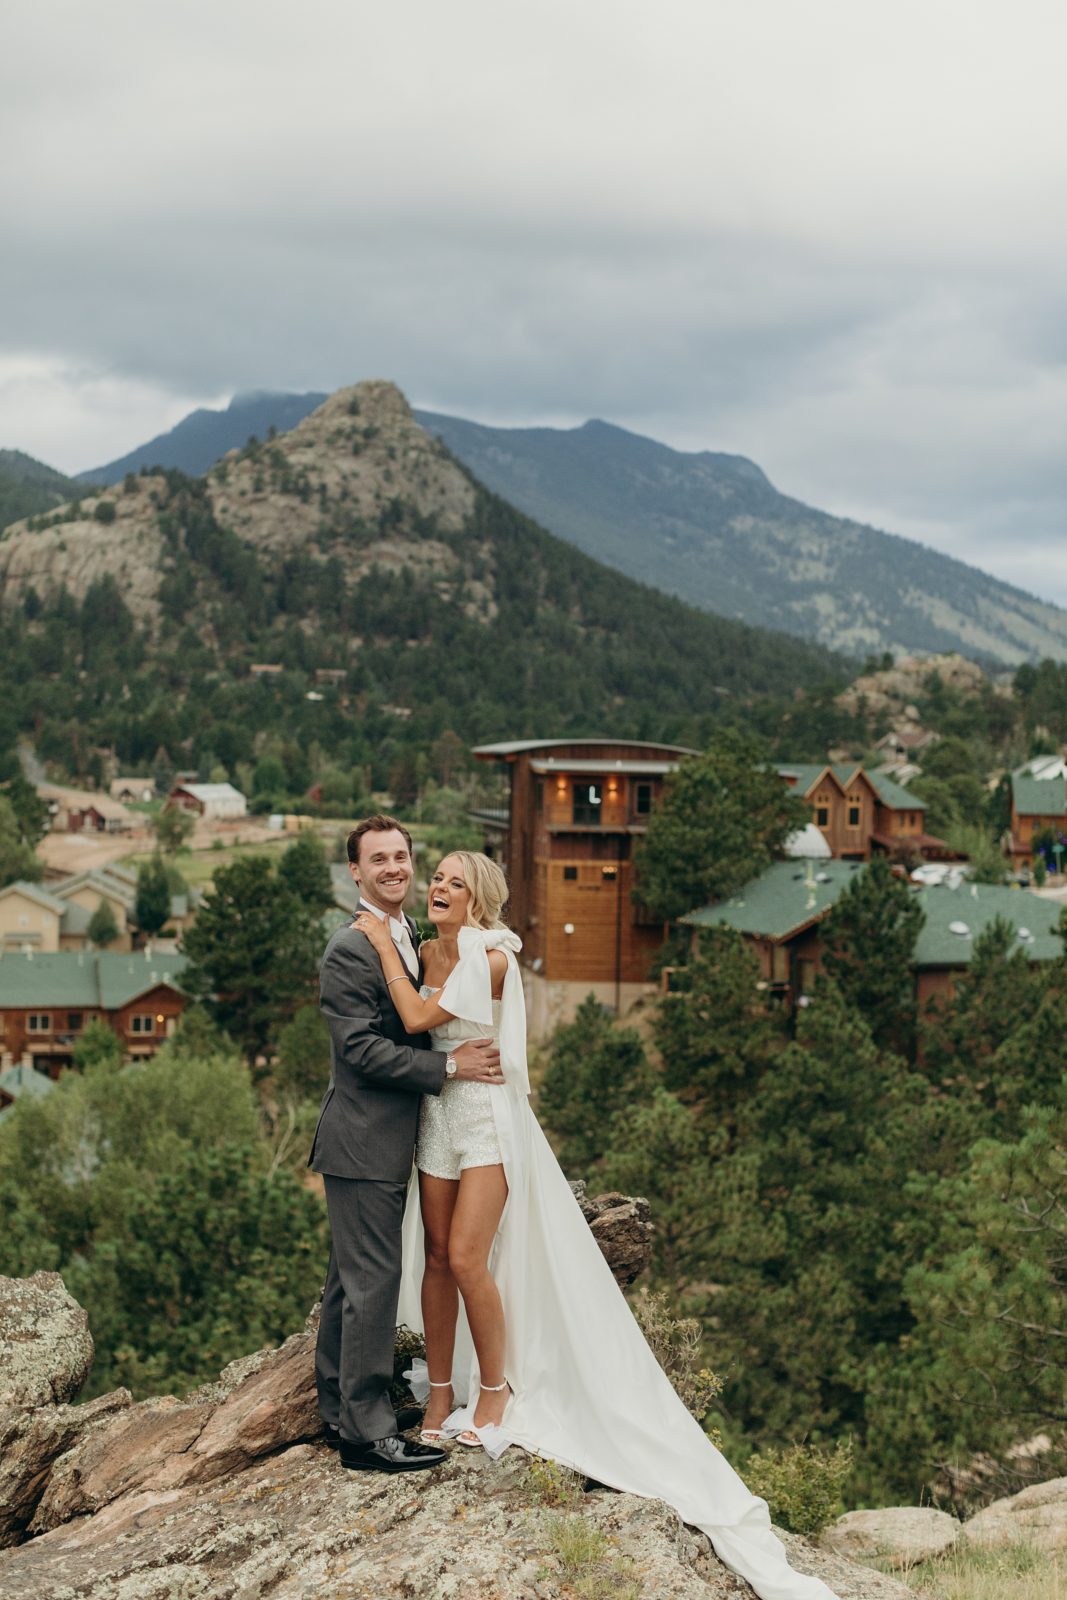 SkyView Fall River Wedding Venue, Colorado mountain wedding venues, Colorado wedding photographer, SkyView Estes park